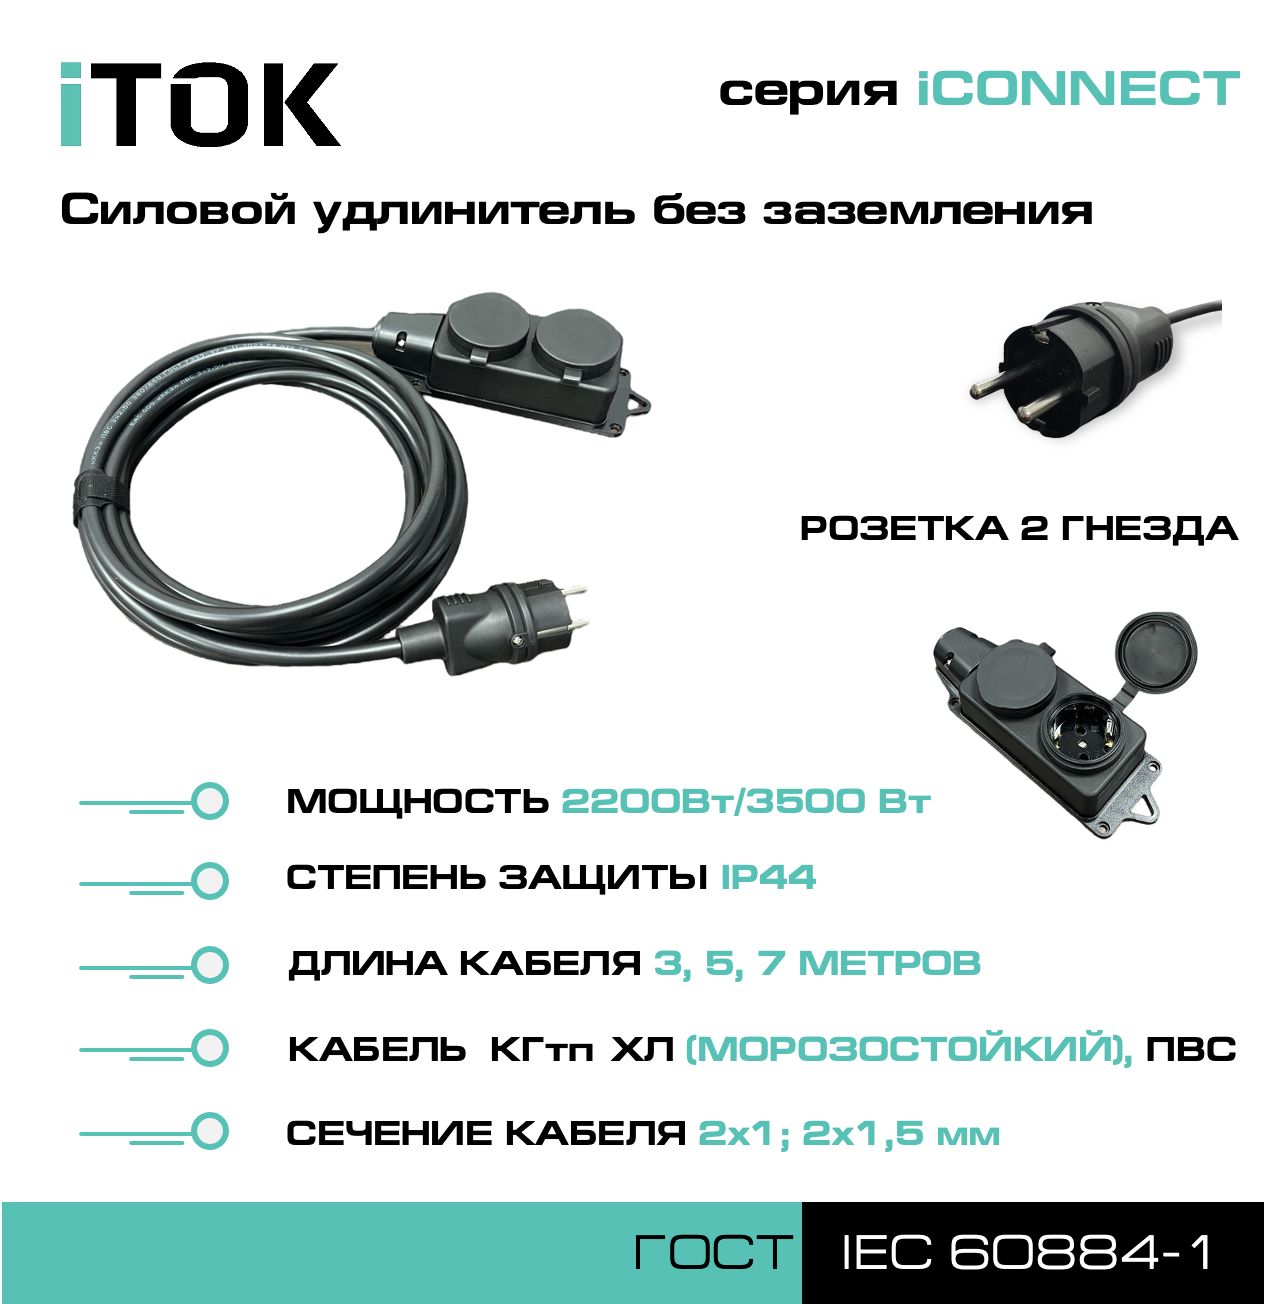 Удлинитель без земли серии iTOK iCONNECT ПВС 2х1,5 мм 2 гнезда IP44 5 м